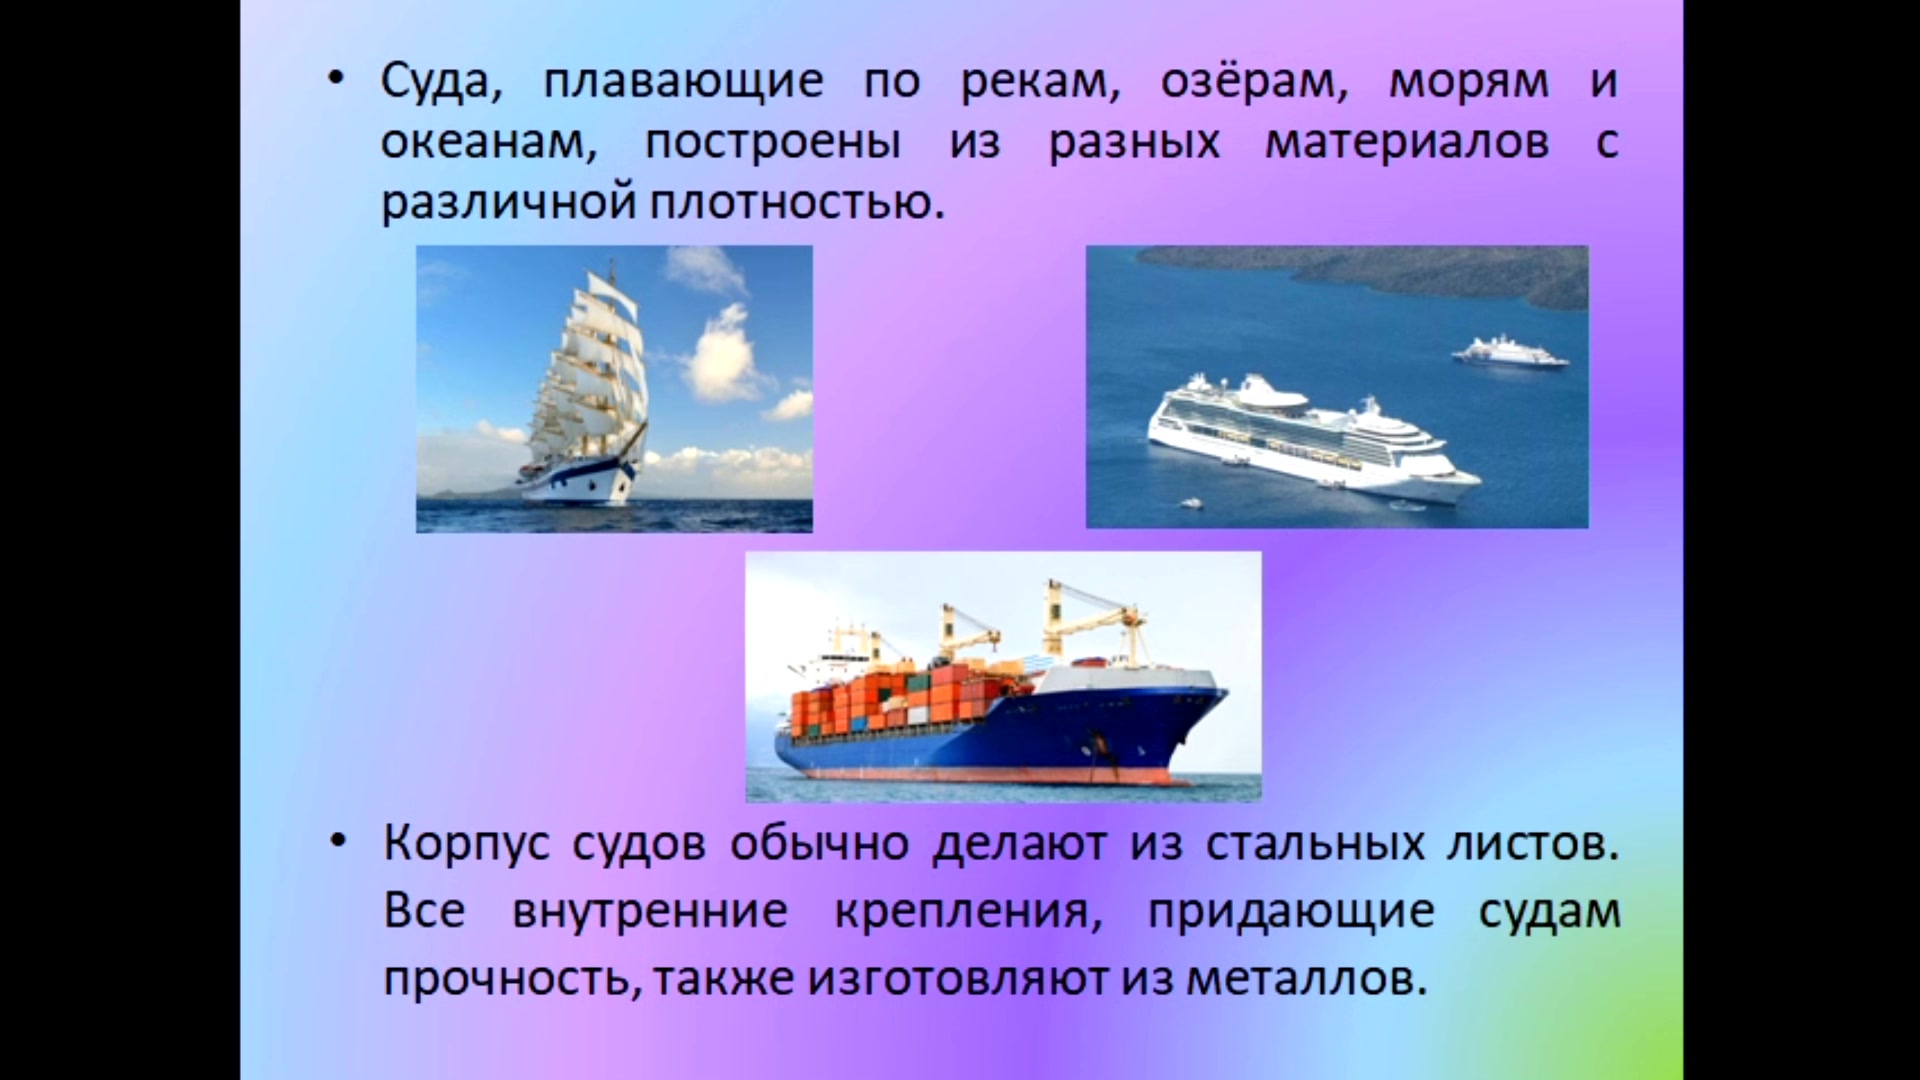 Плавание судов 7 класс. Плавание судов воздухоплавание физика 7 класс. Презентация по физике плавание судов. Плавание тел плавание судов. Плавание тел воздухоплавание 7 класс физика.